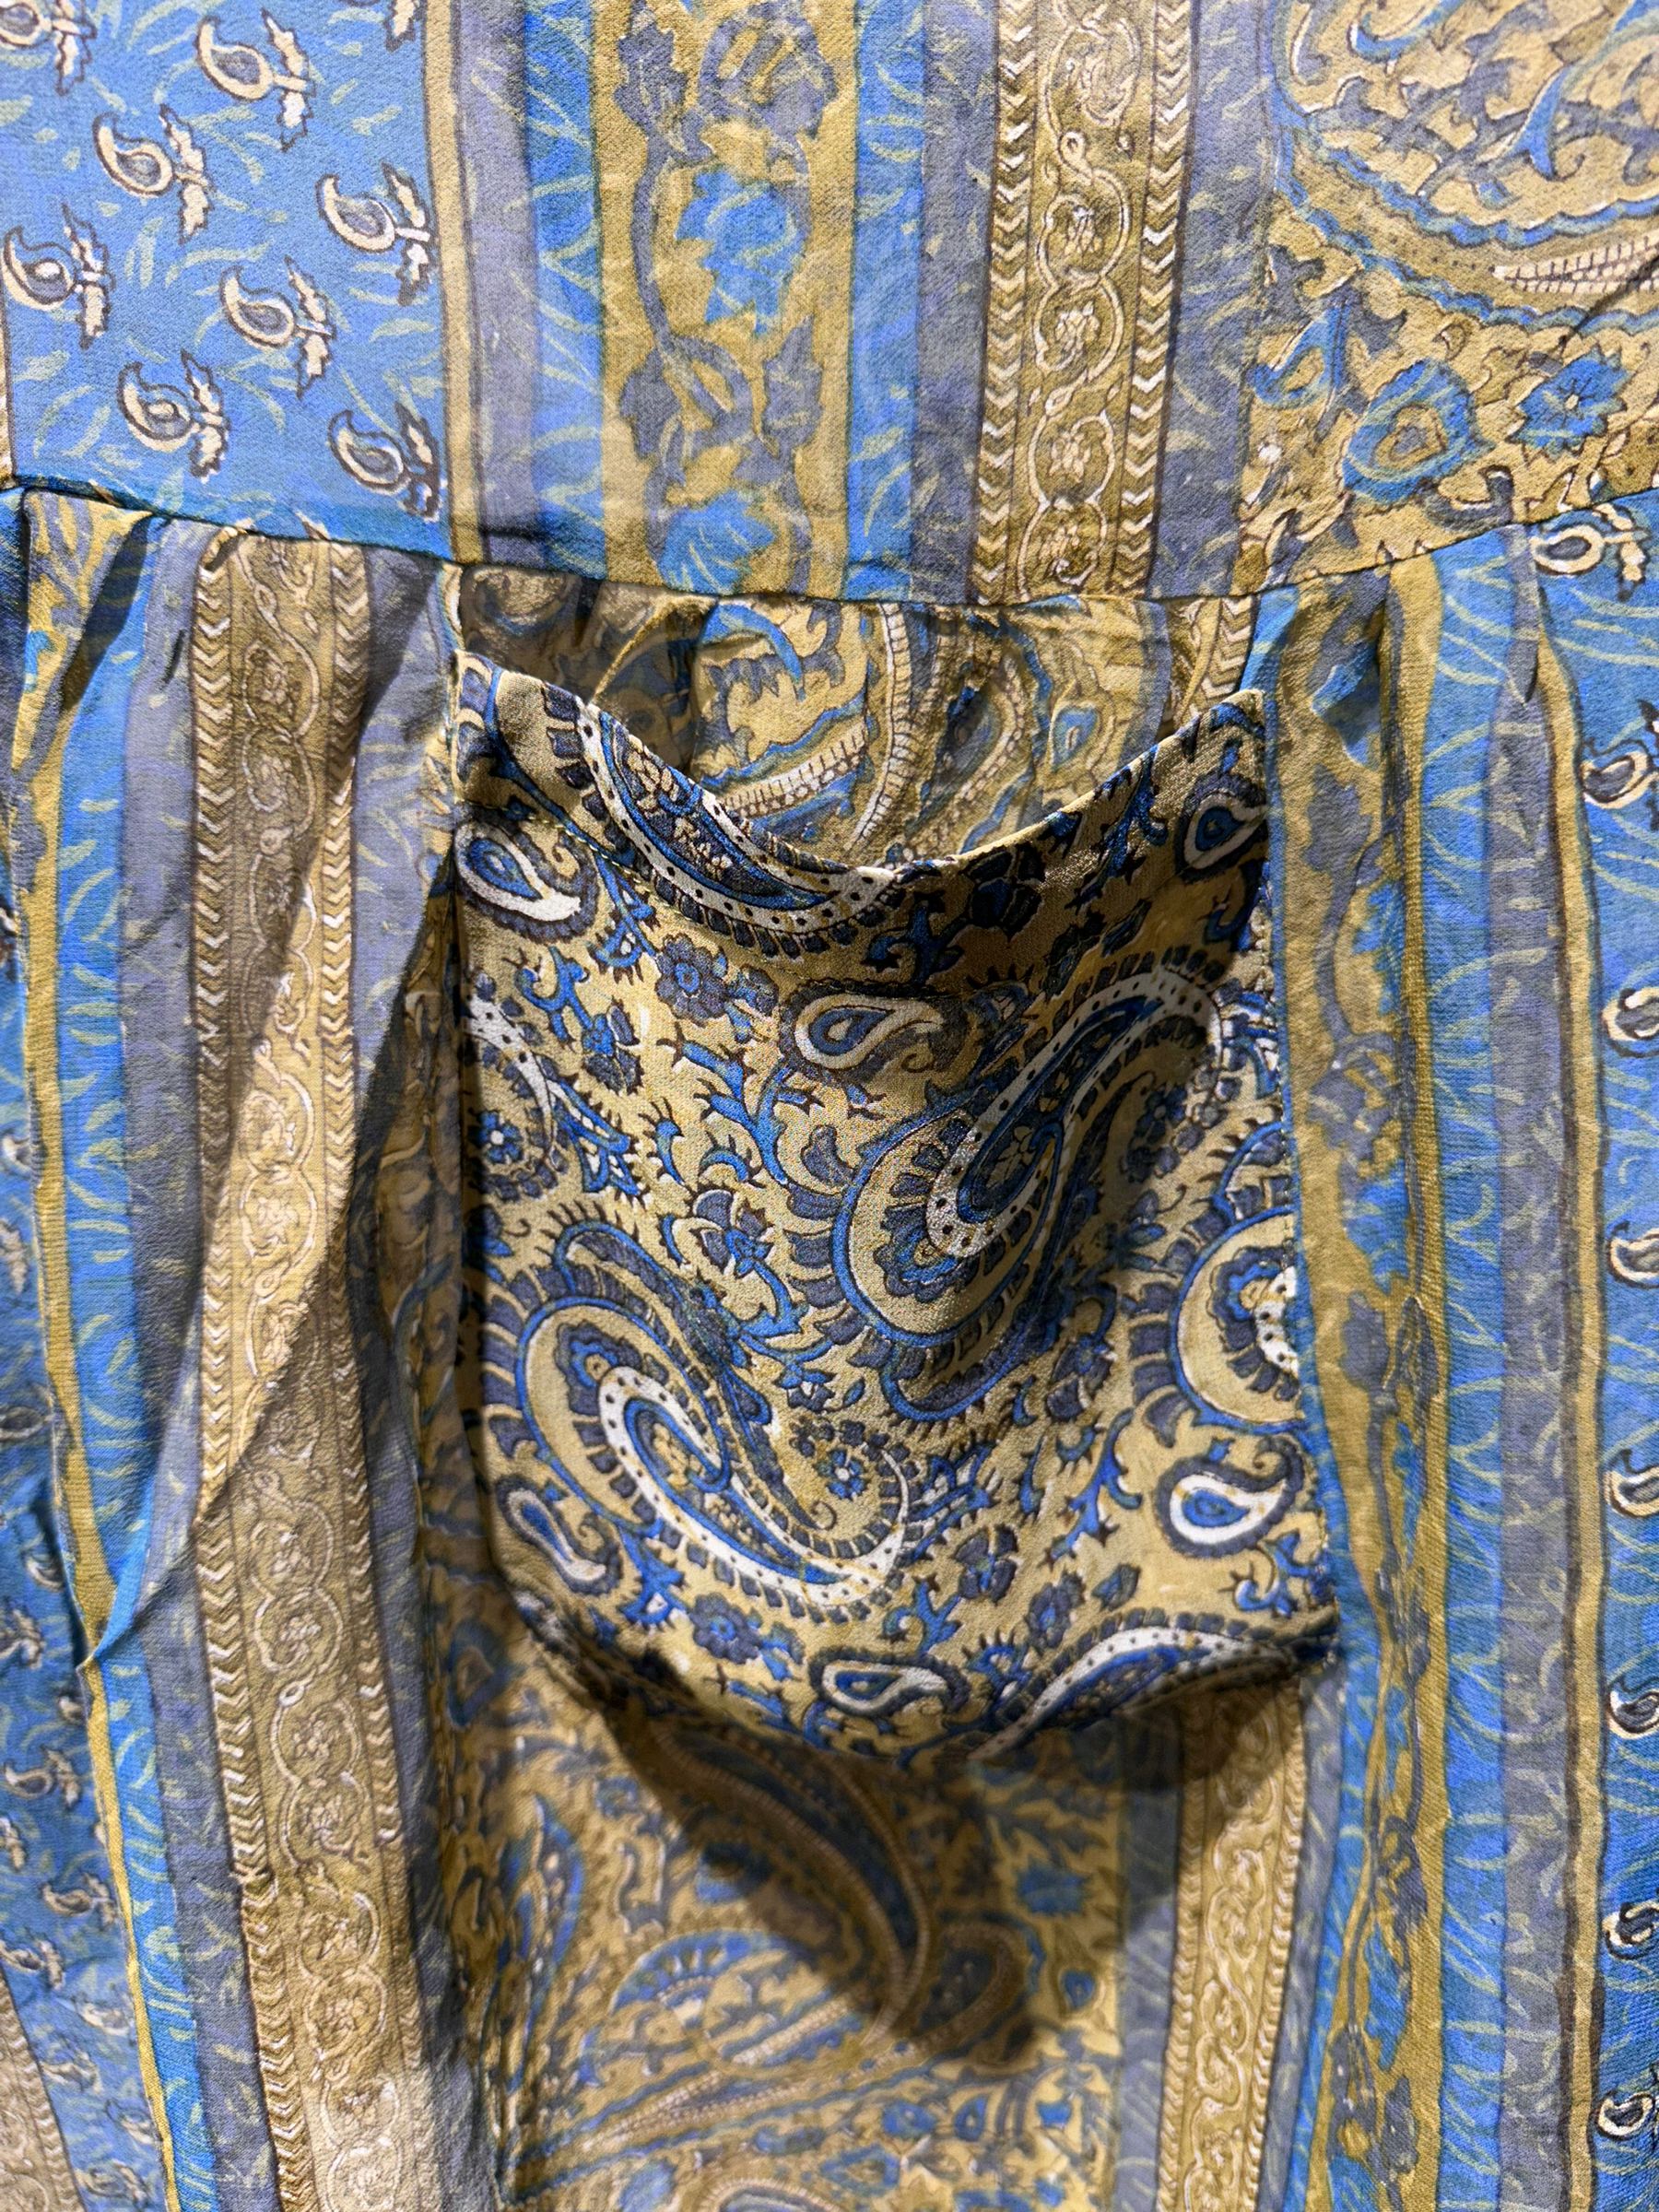 Corinne Mitchell Sheer Avatar Pure Silk Boxy Babydoll Dress